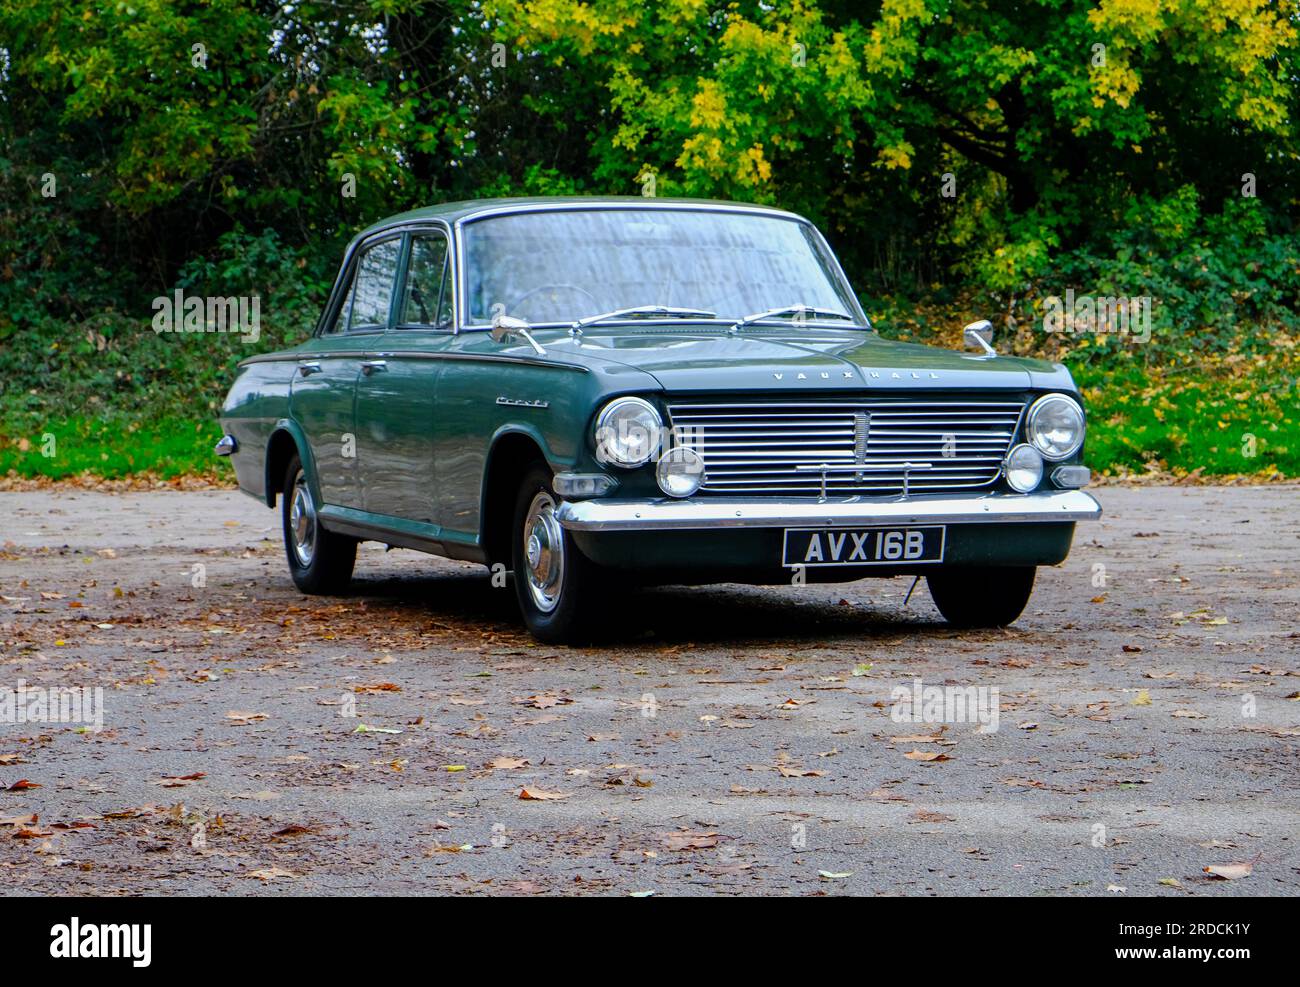 1964 Vauxhall PB Cresta classic British family car Stock Photo